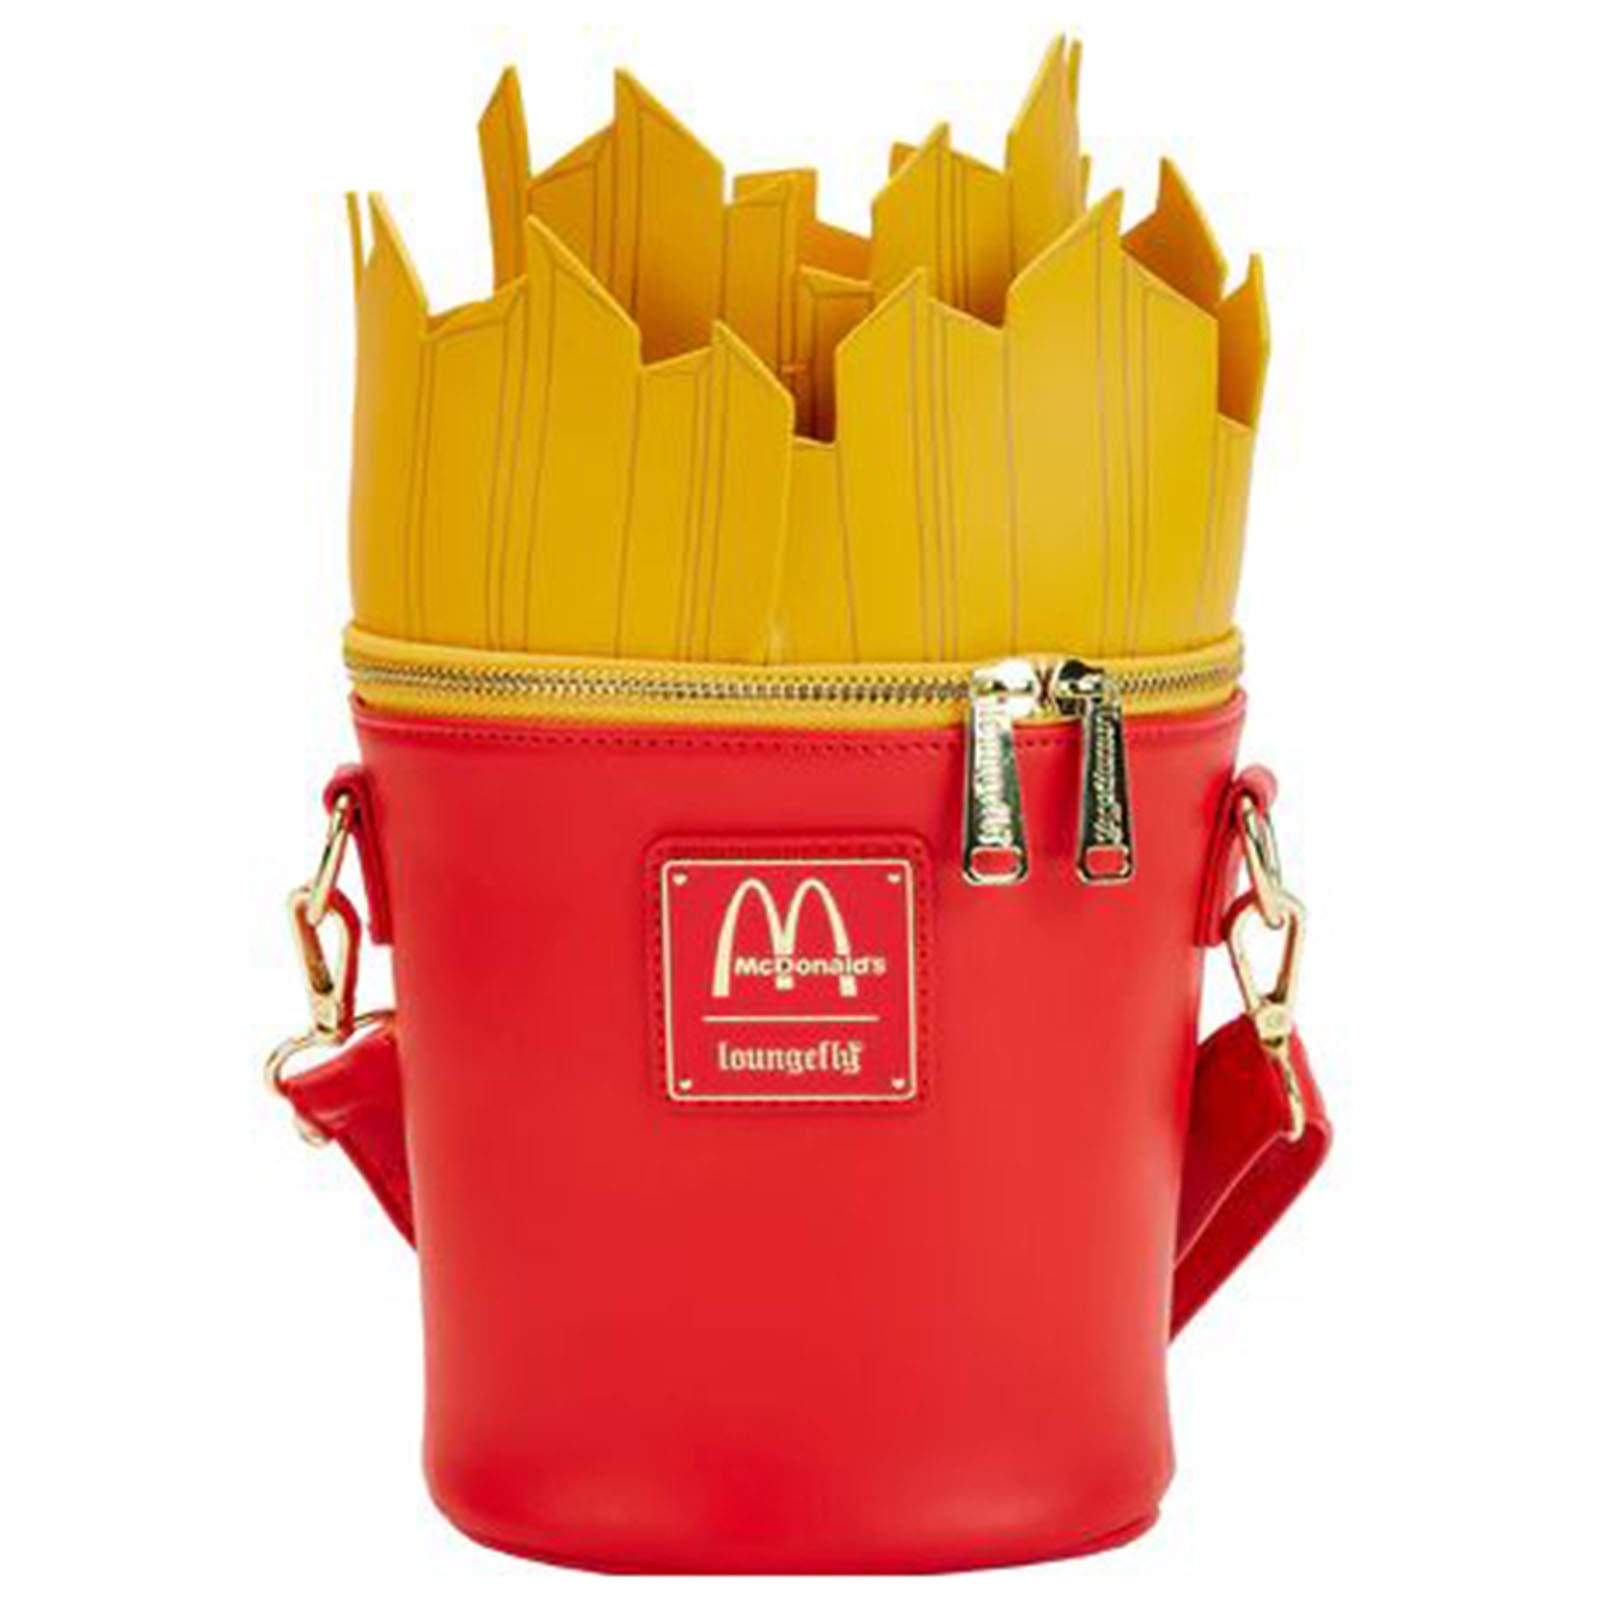 McDonalds: French Fries Loungefly Crossbody Bag